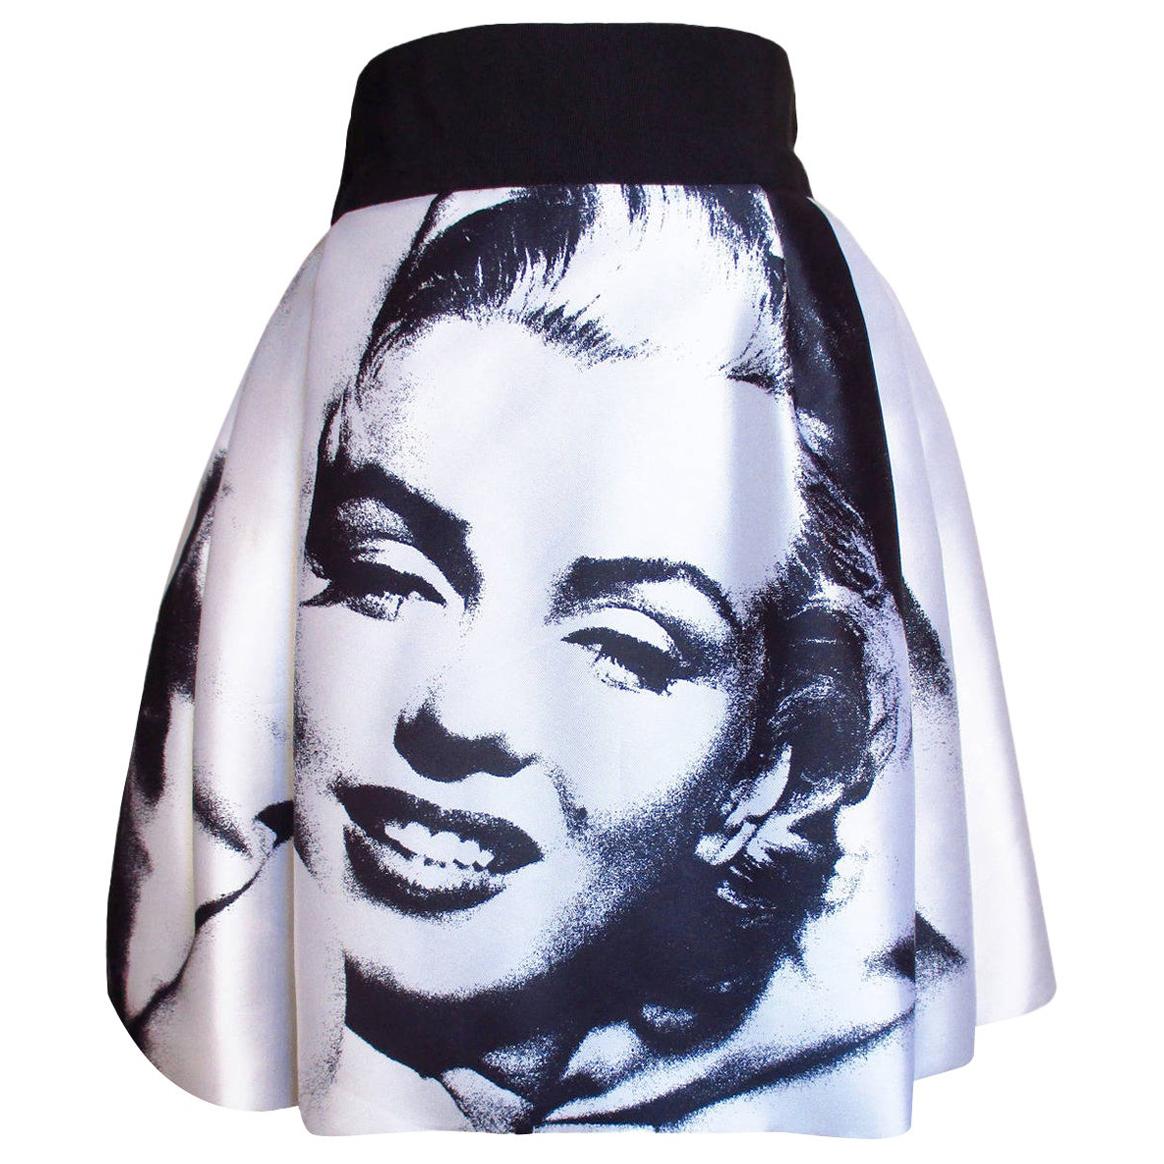 Dolce & Gabbana Marilyn Monroe Print Silk Skirt